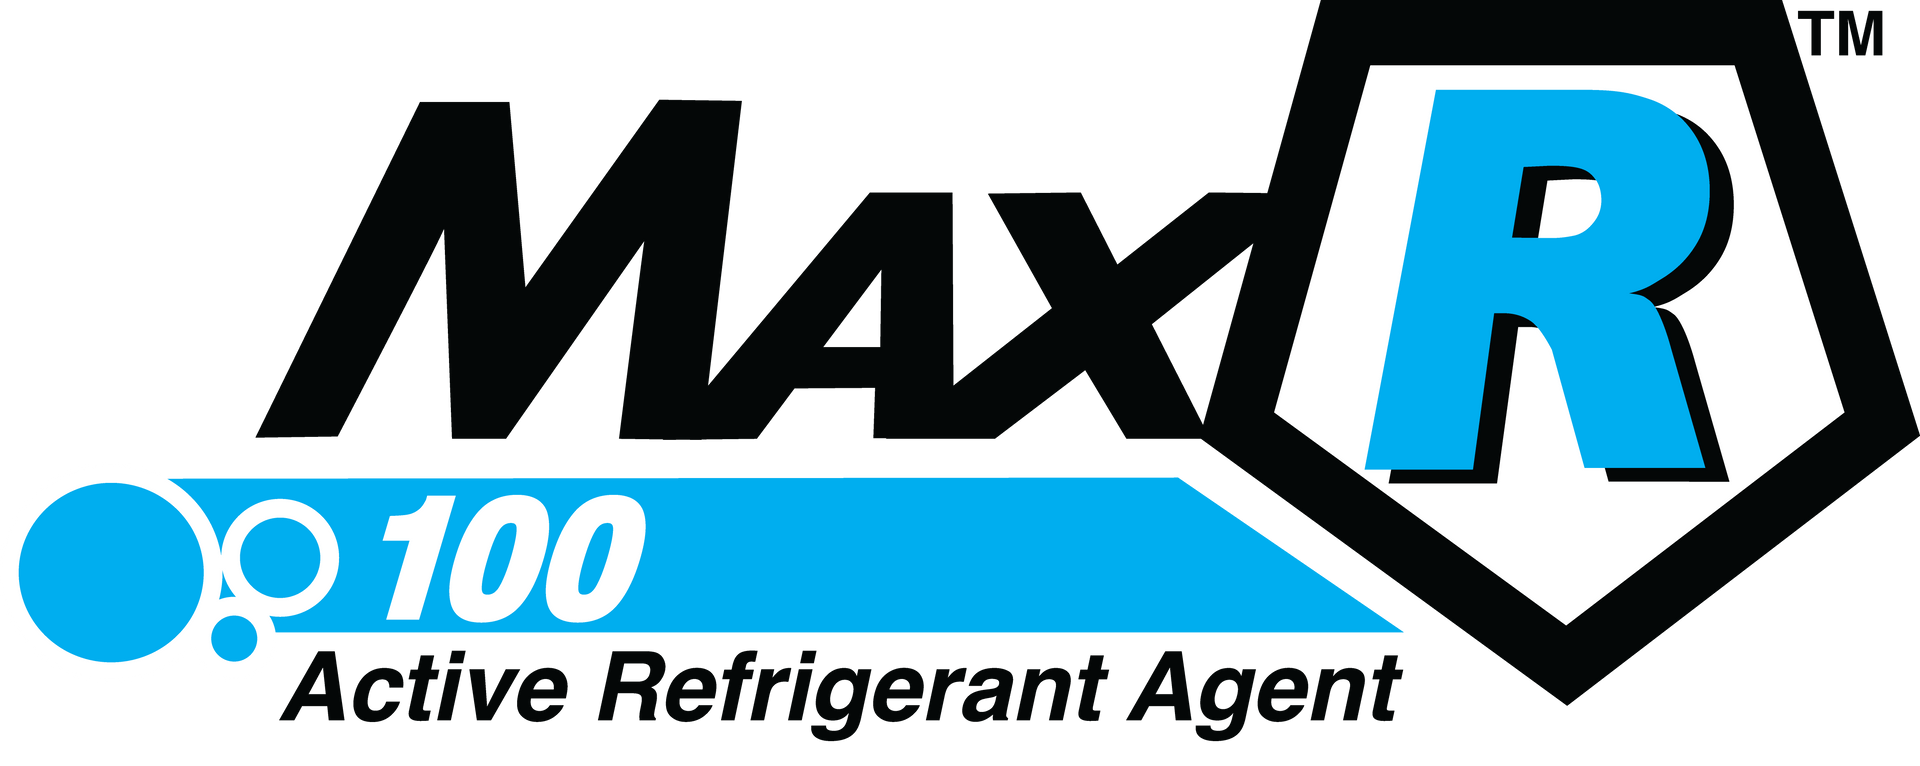 Max100